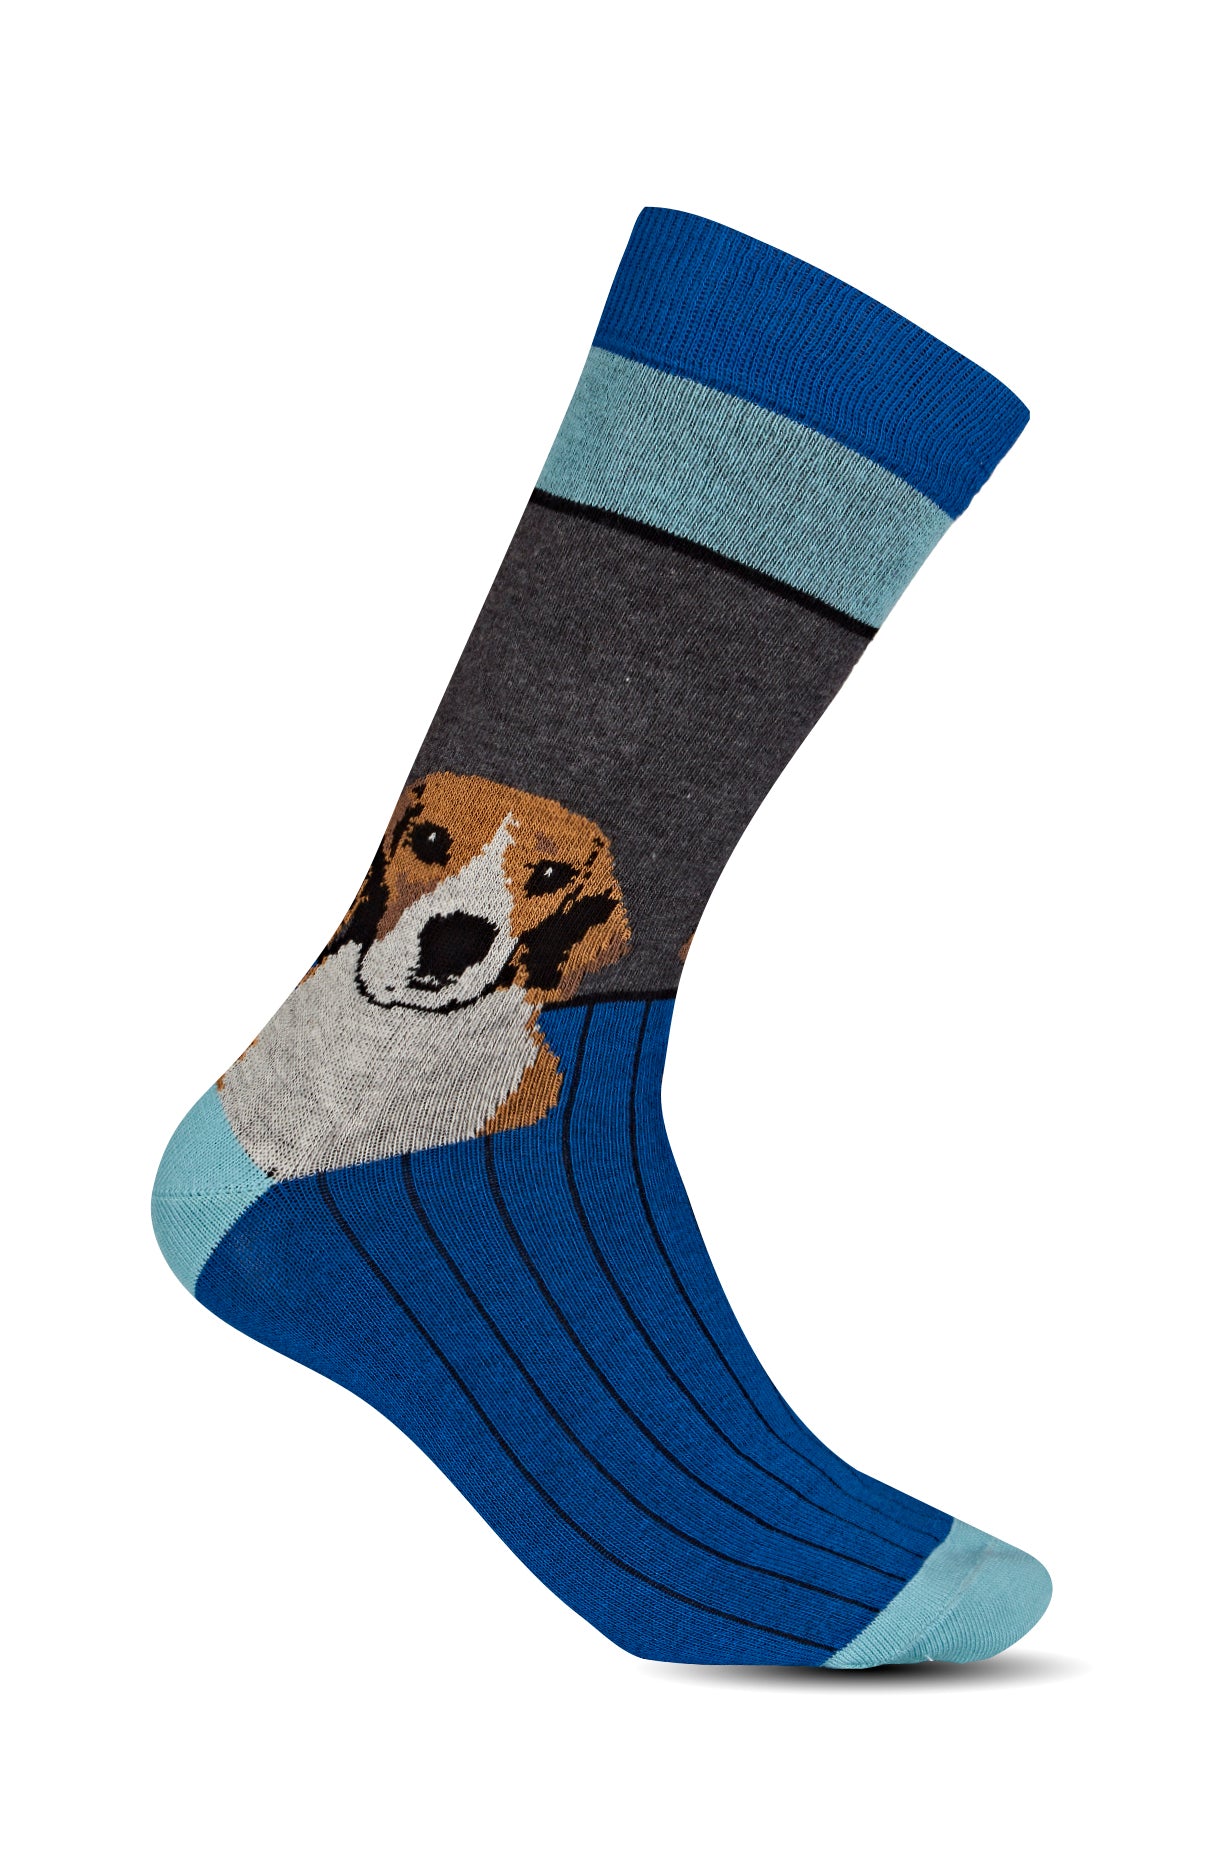 Socks - Beagle